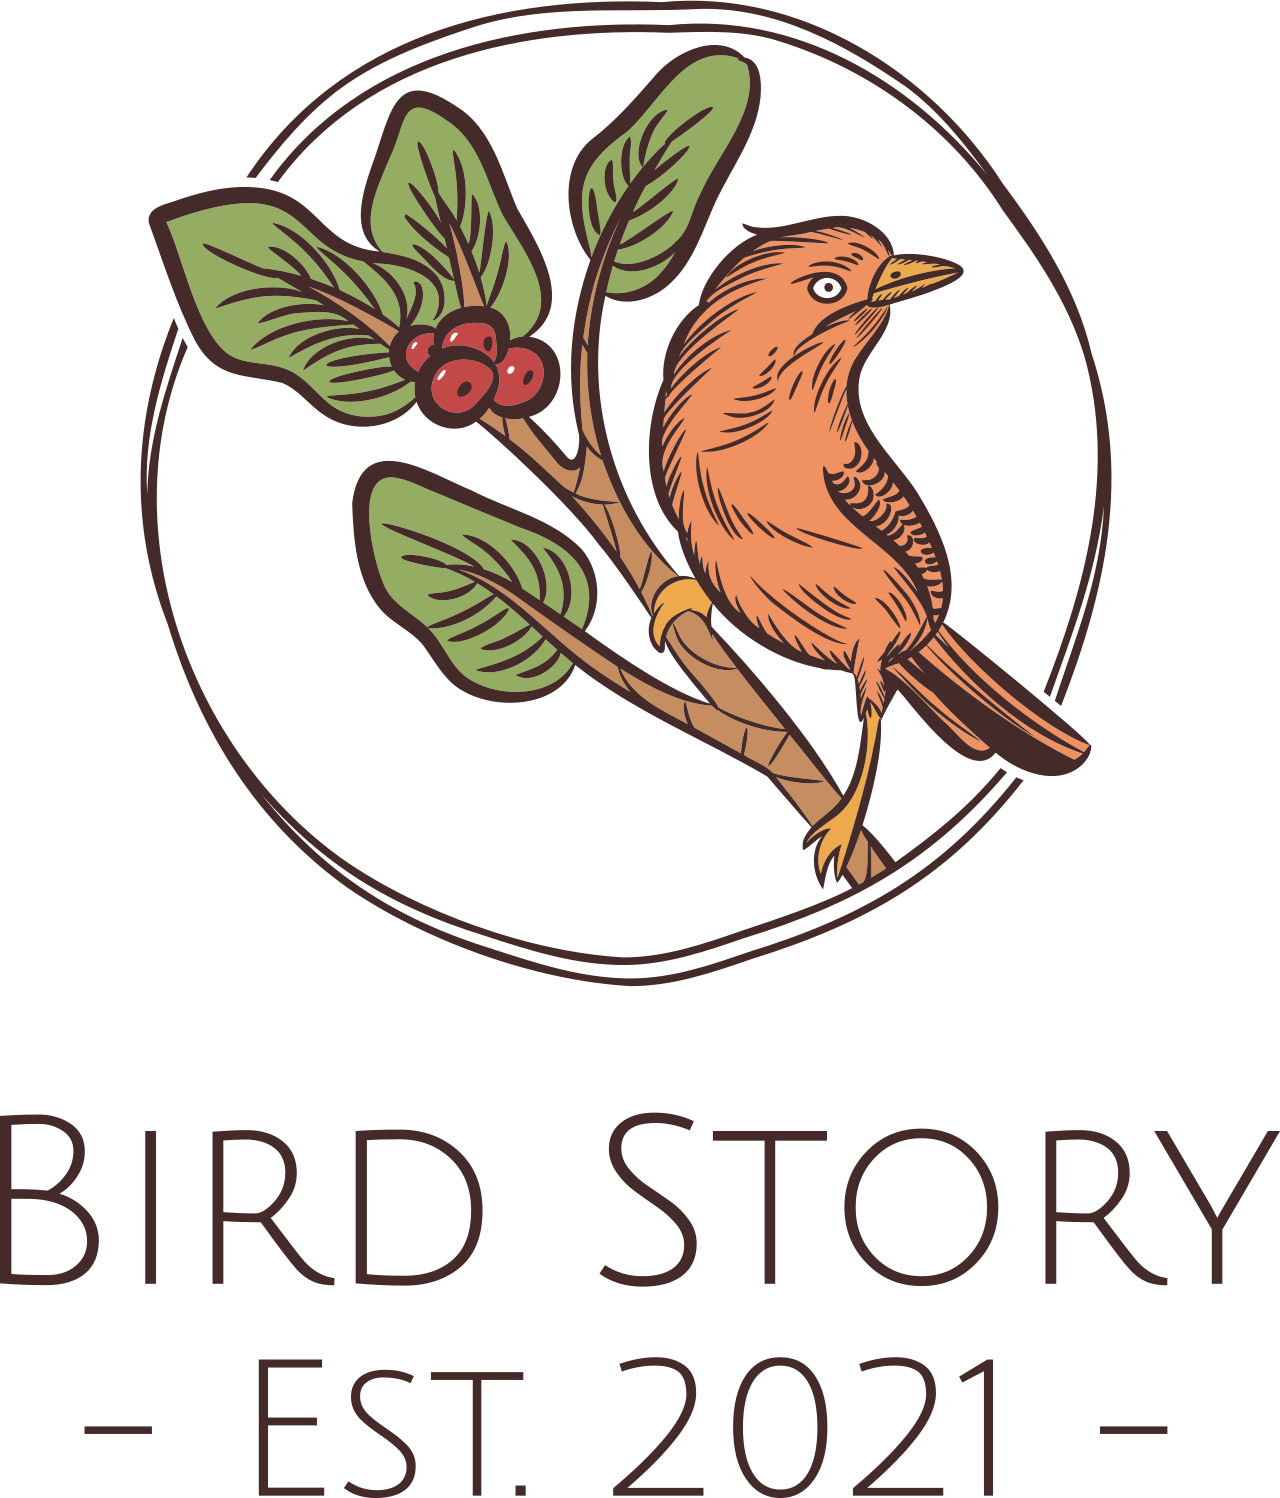 Bird Story's web page